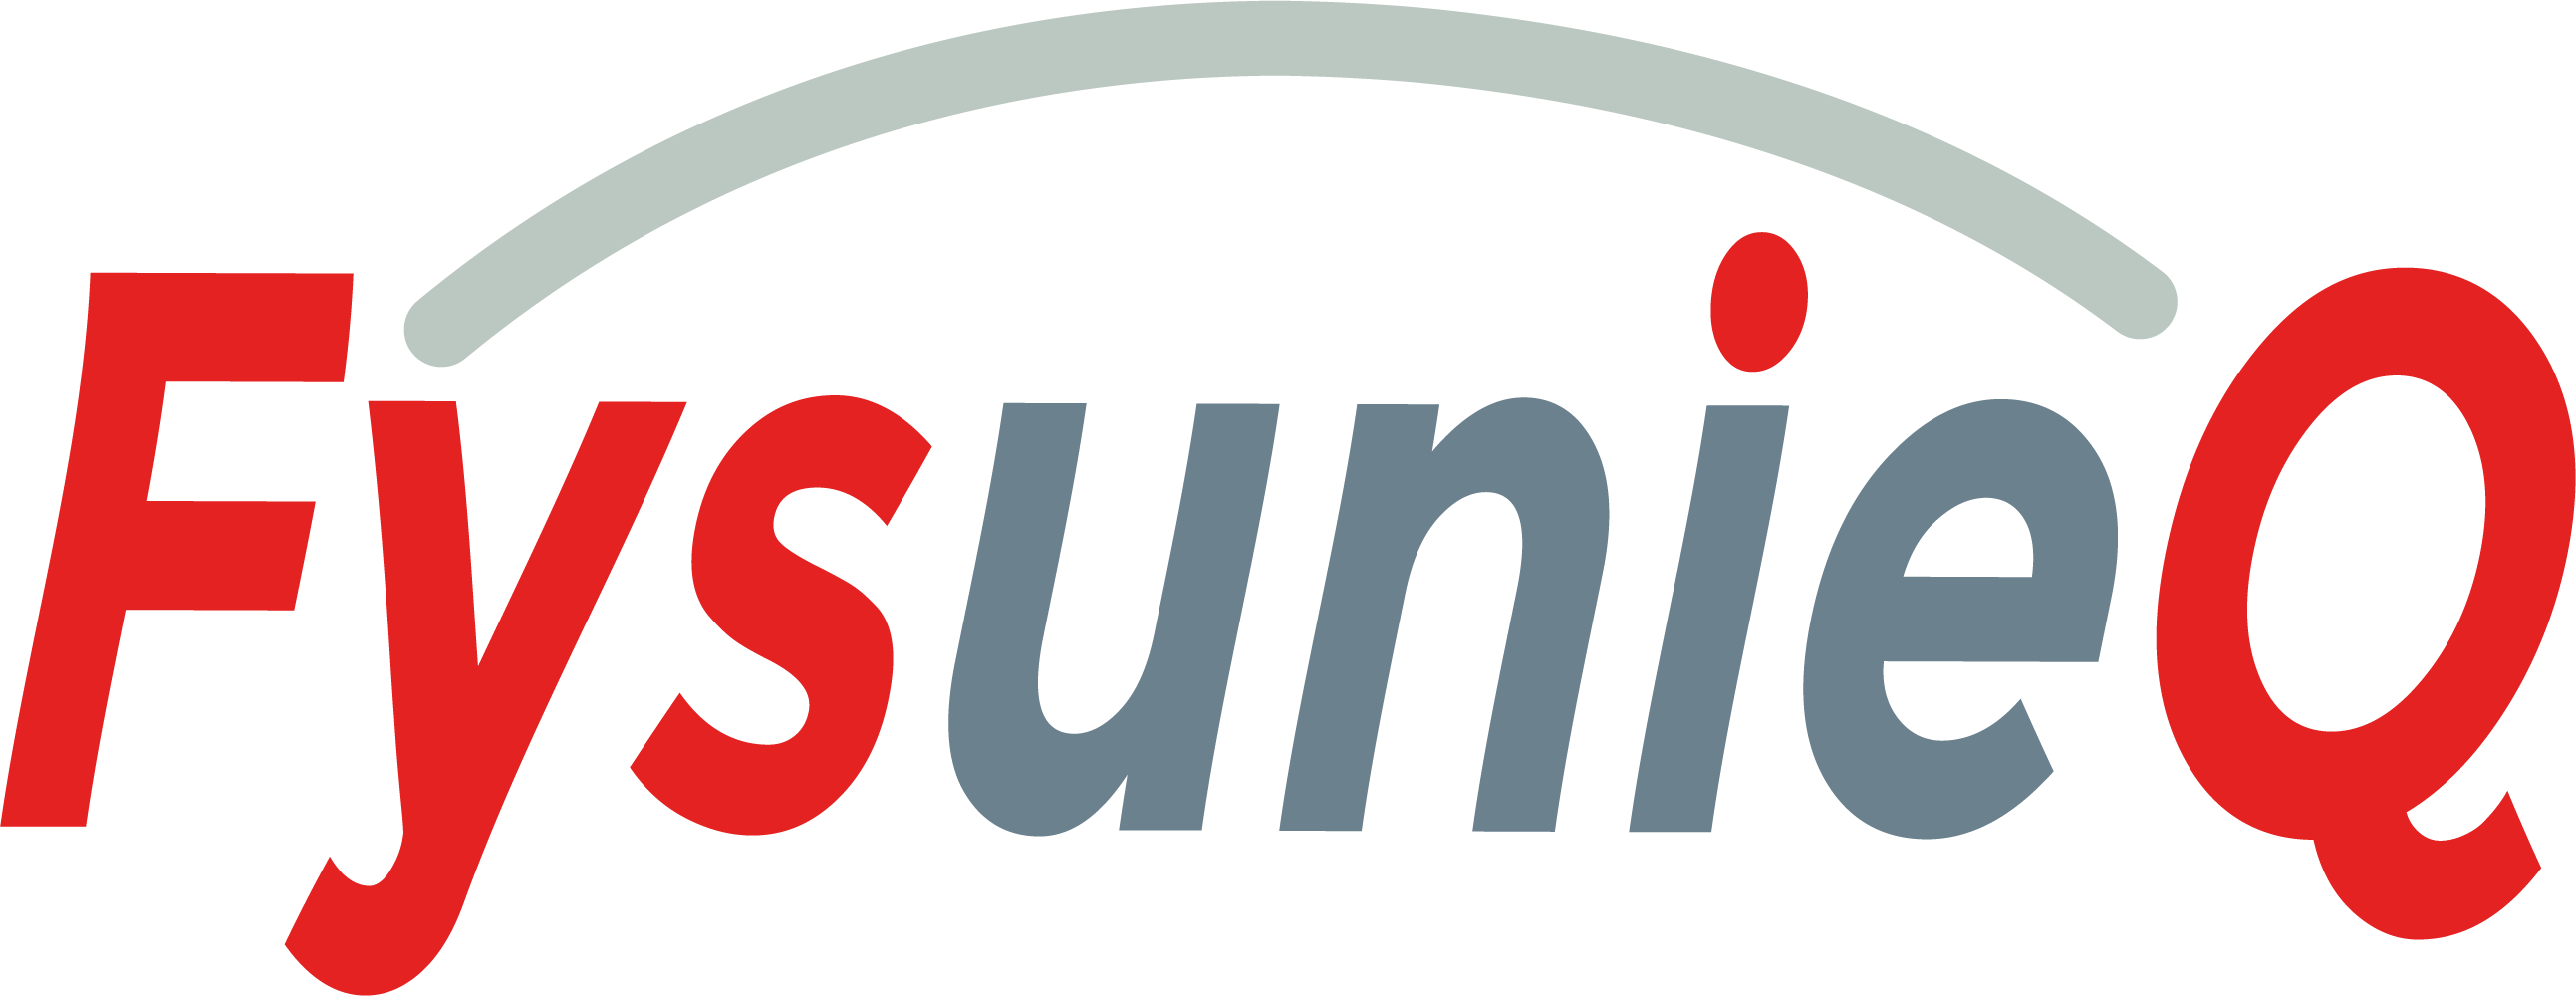 fysunieq logo klein 2016